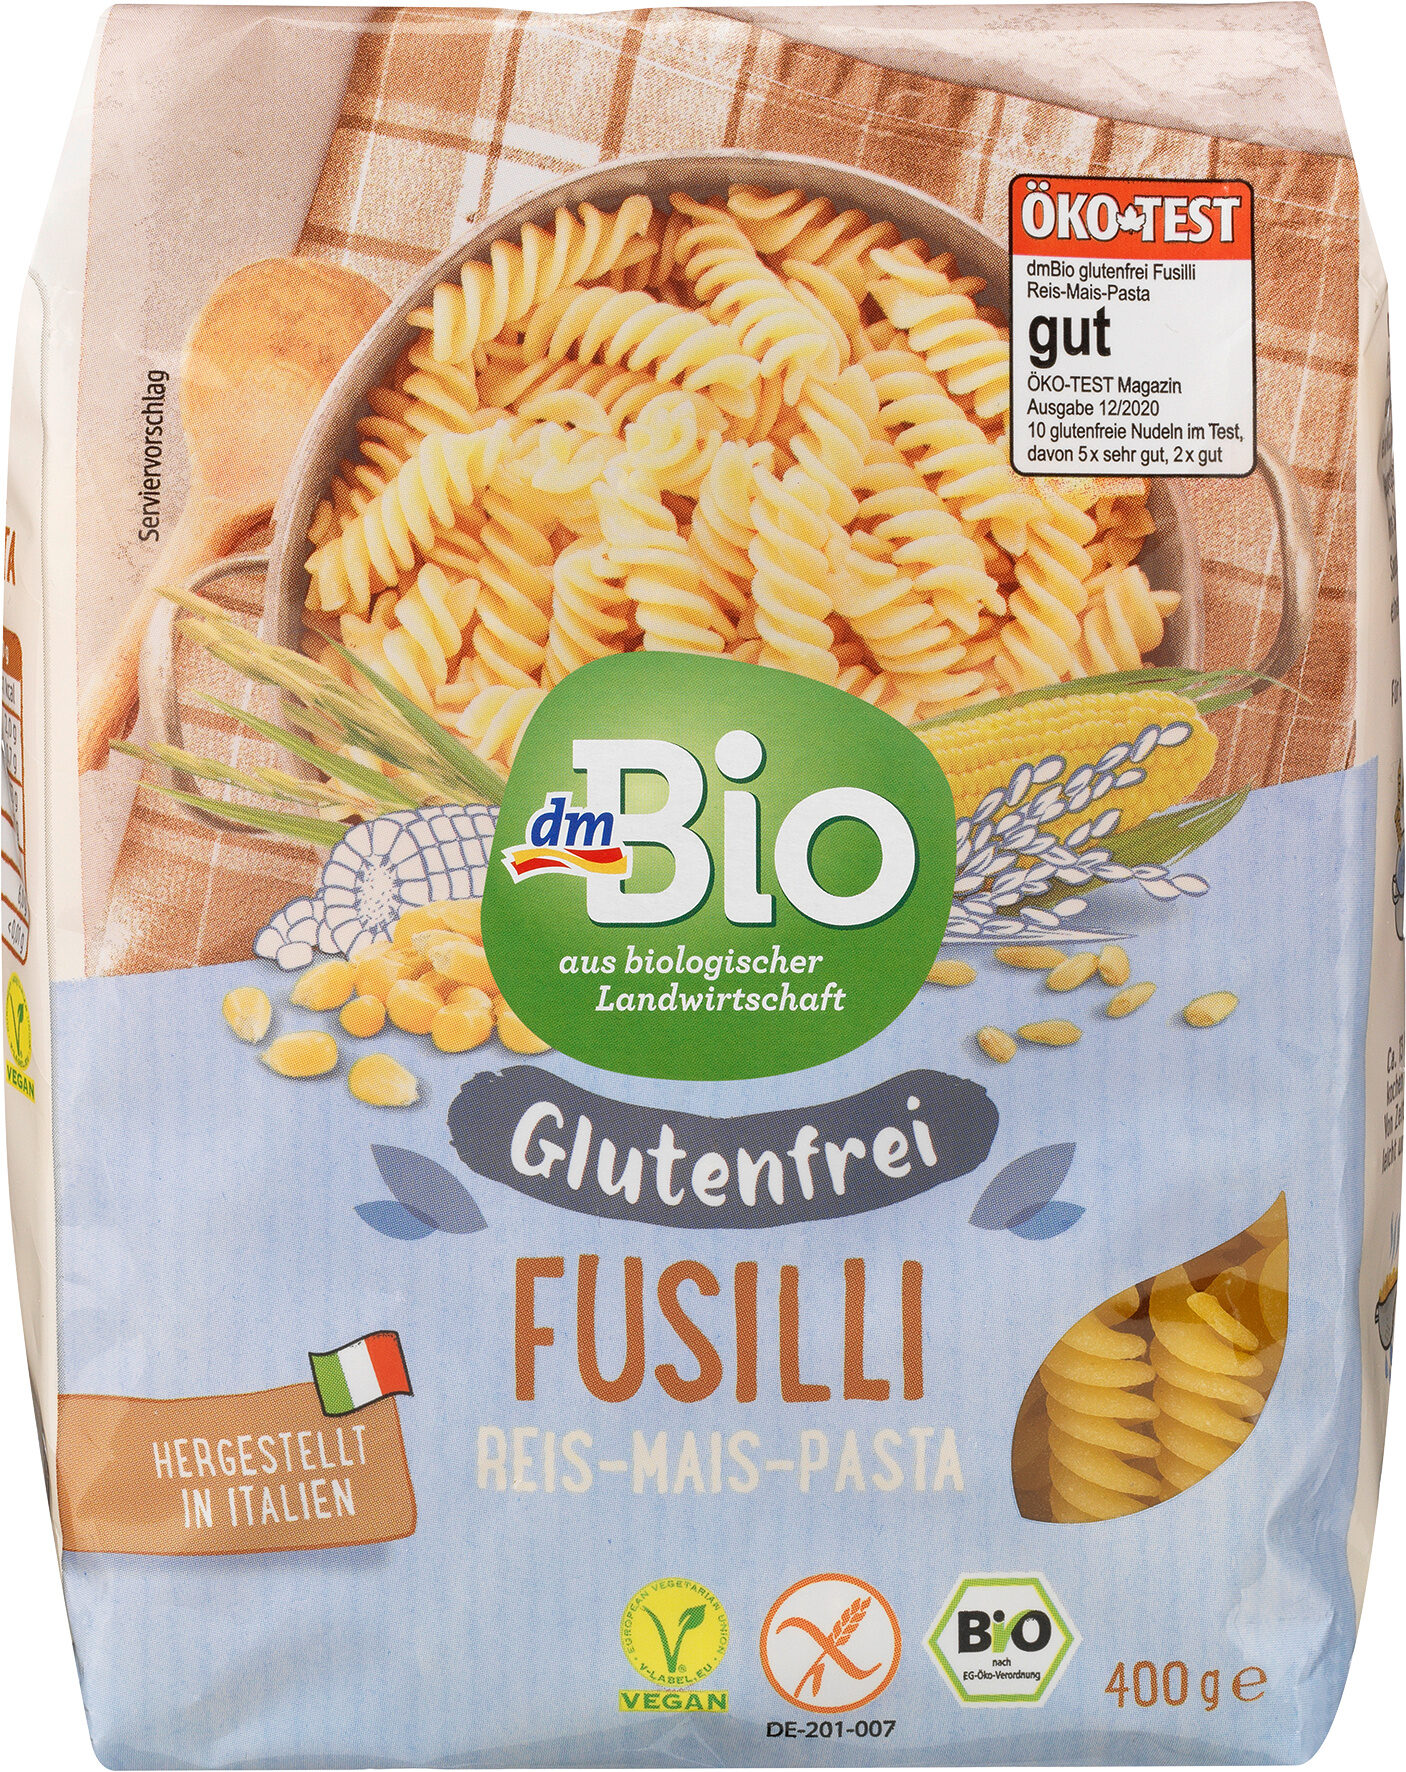 Fusilli Reis-Mais-Pasta glutenfrei - Produkt